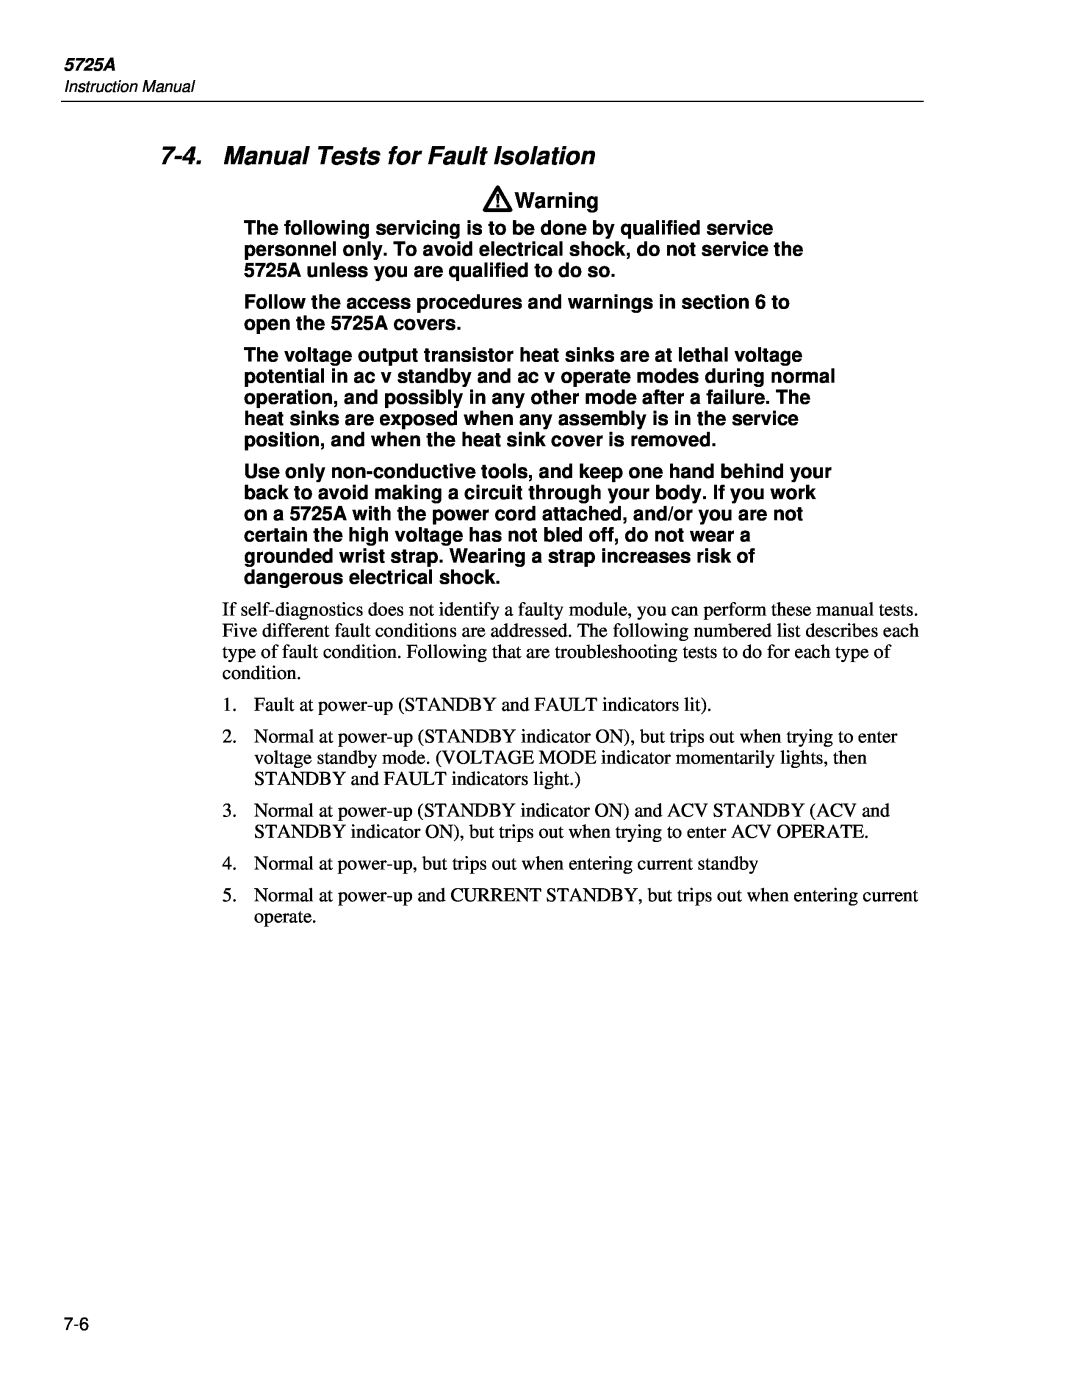 Fluke 5725A instruction manual Manual Tests for Fault Isolation 